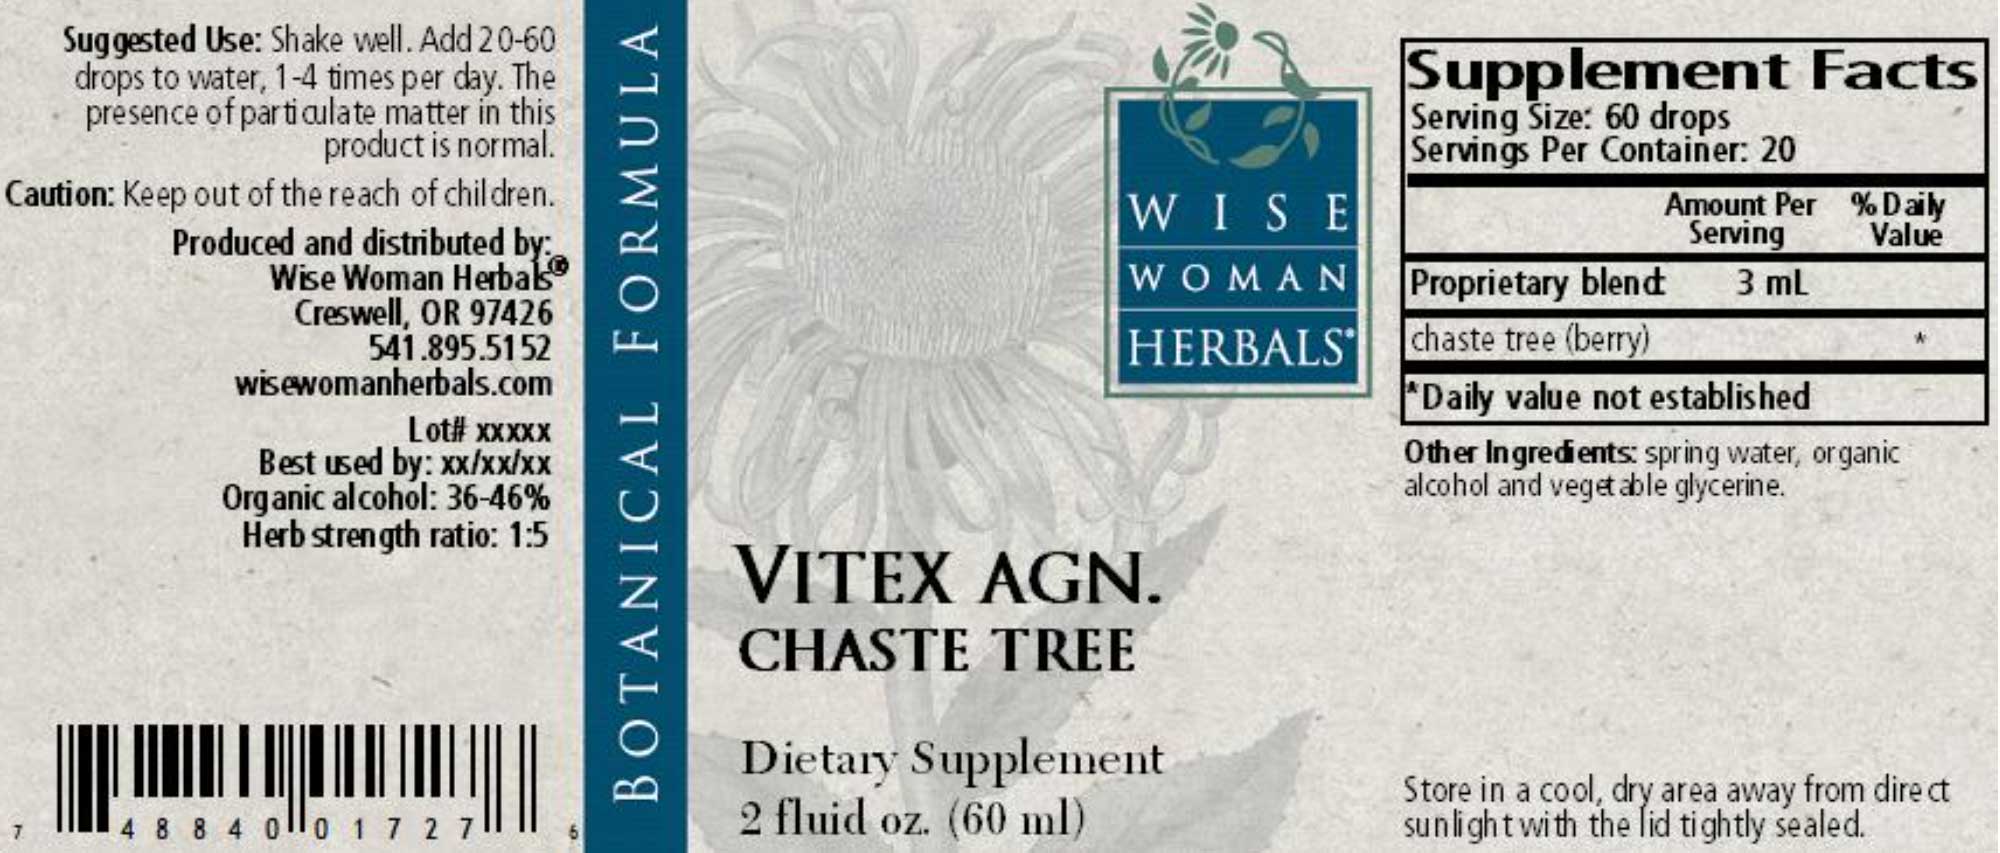 Wise Woman Herbals Vitex Agnus Castus Chaste Tree Label